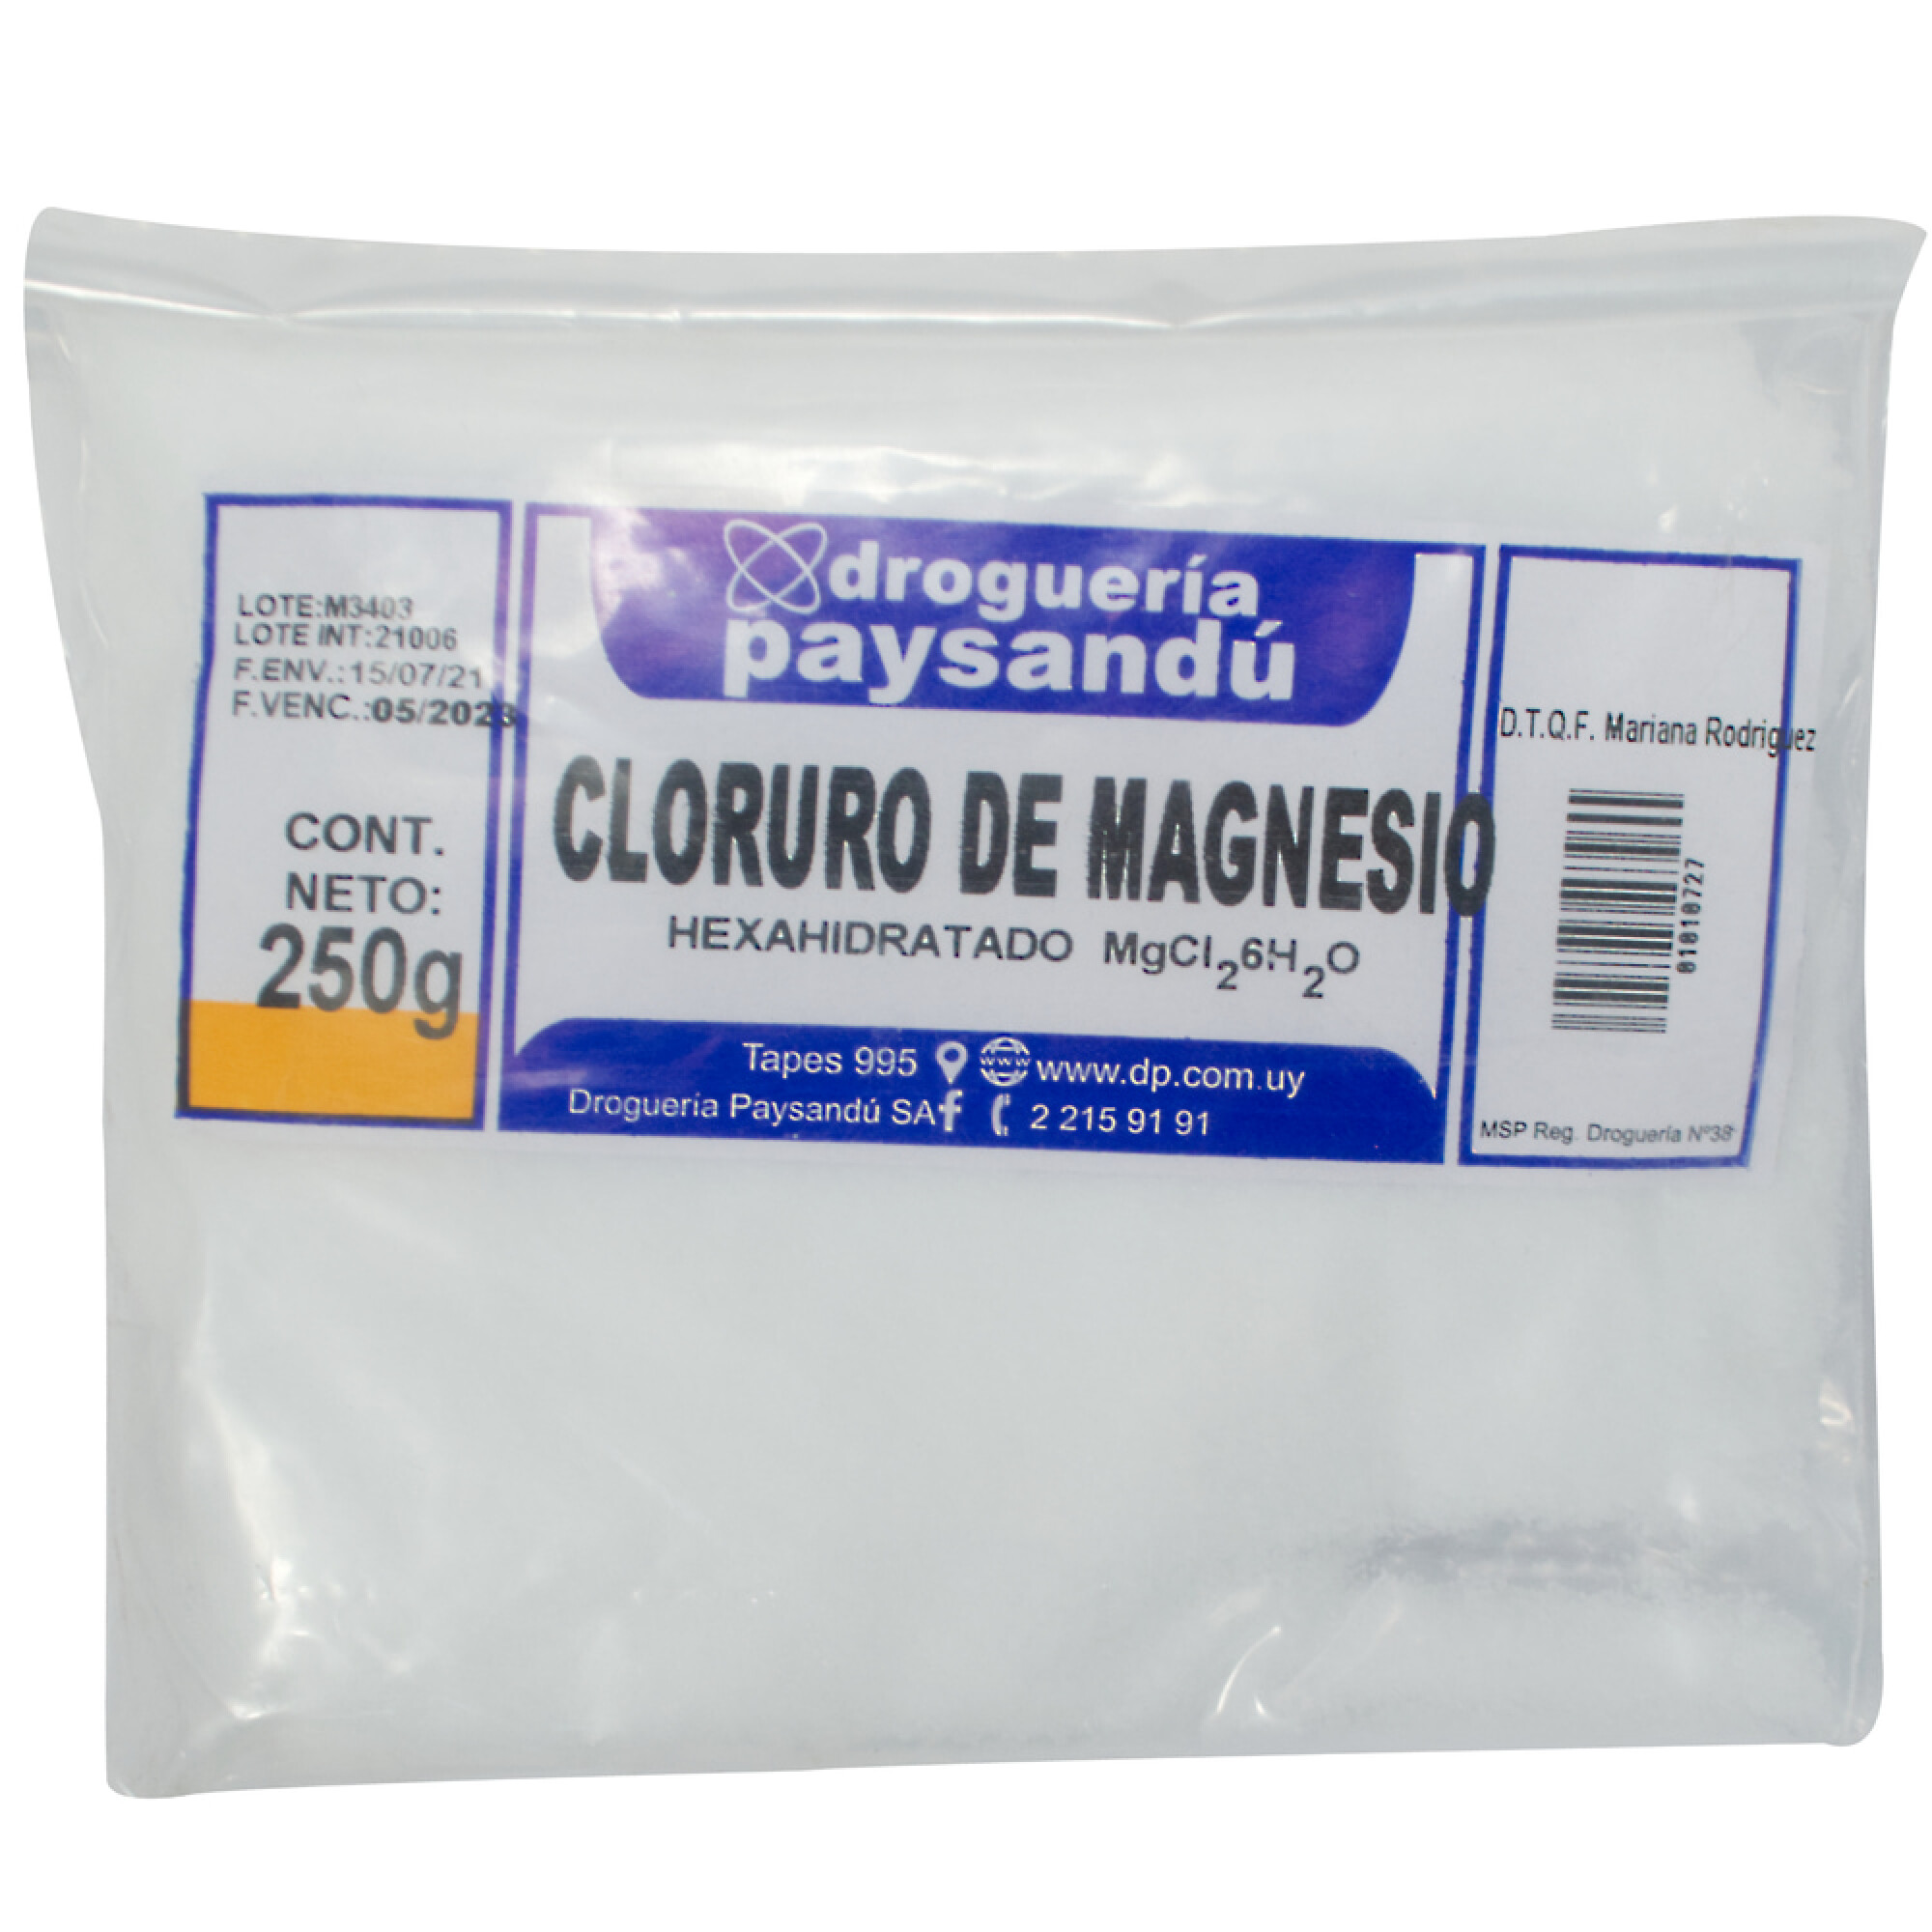 Carbonato de Magnesio Puro